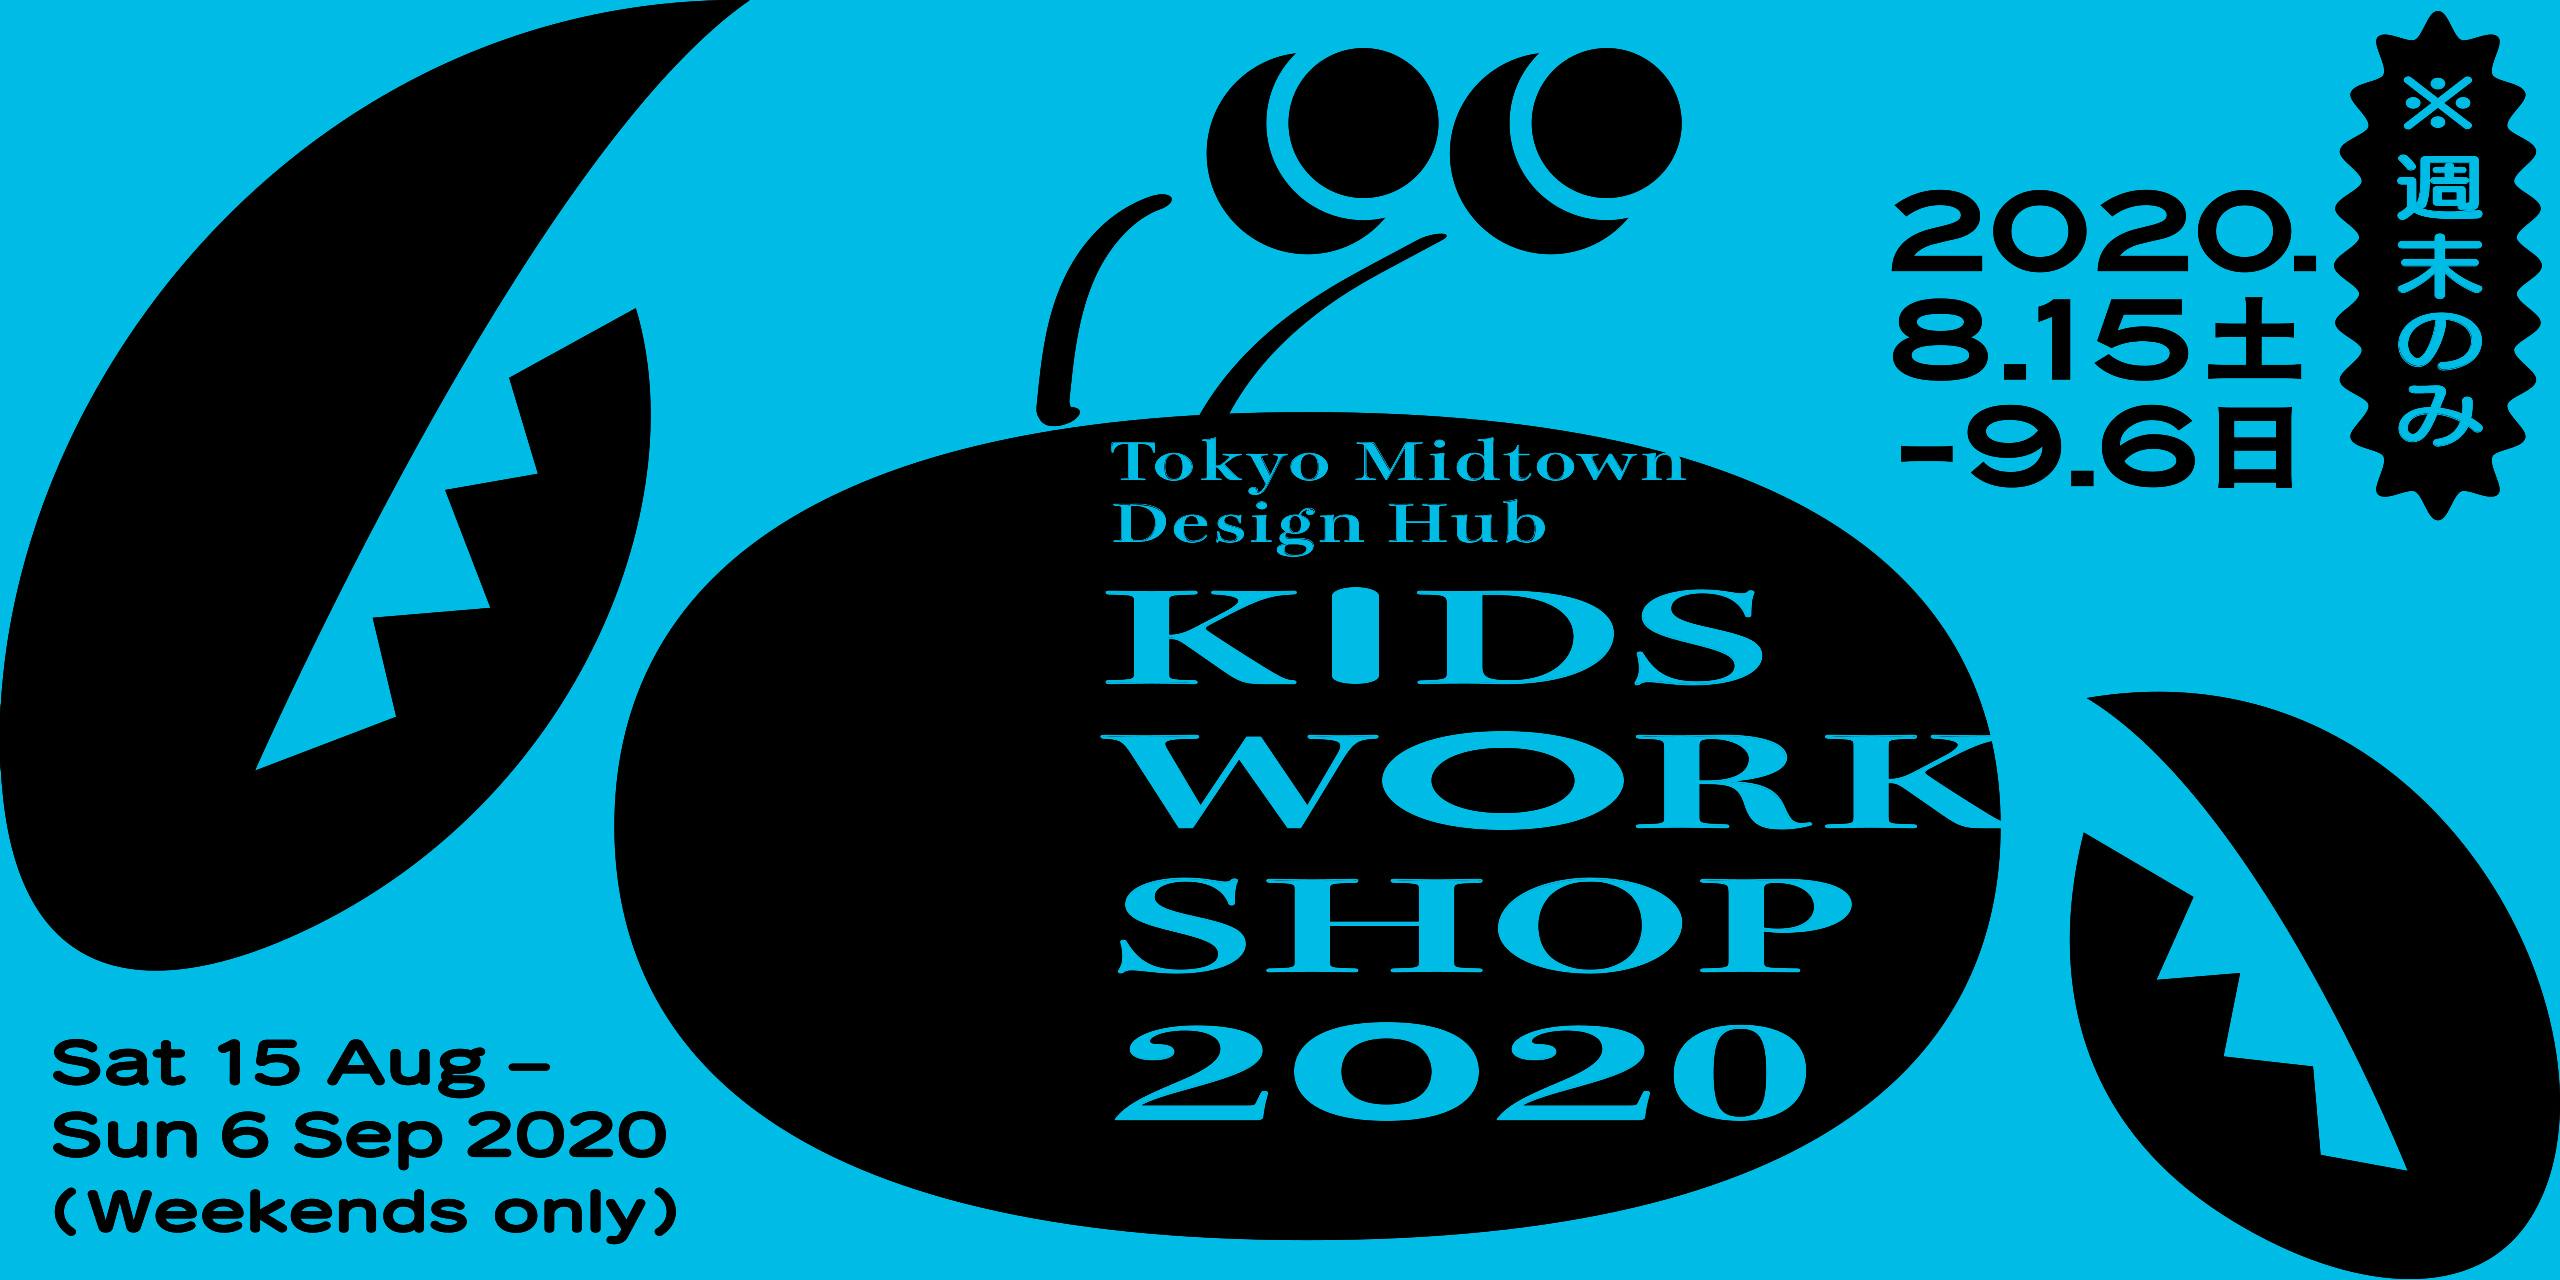 Tokyo Midtown Design Hub Kids Workshop 2020